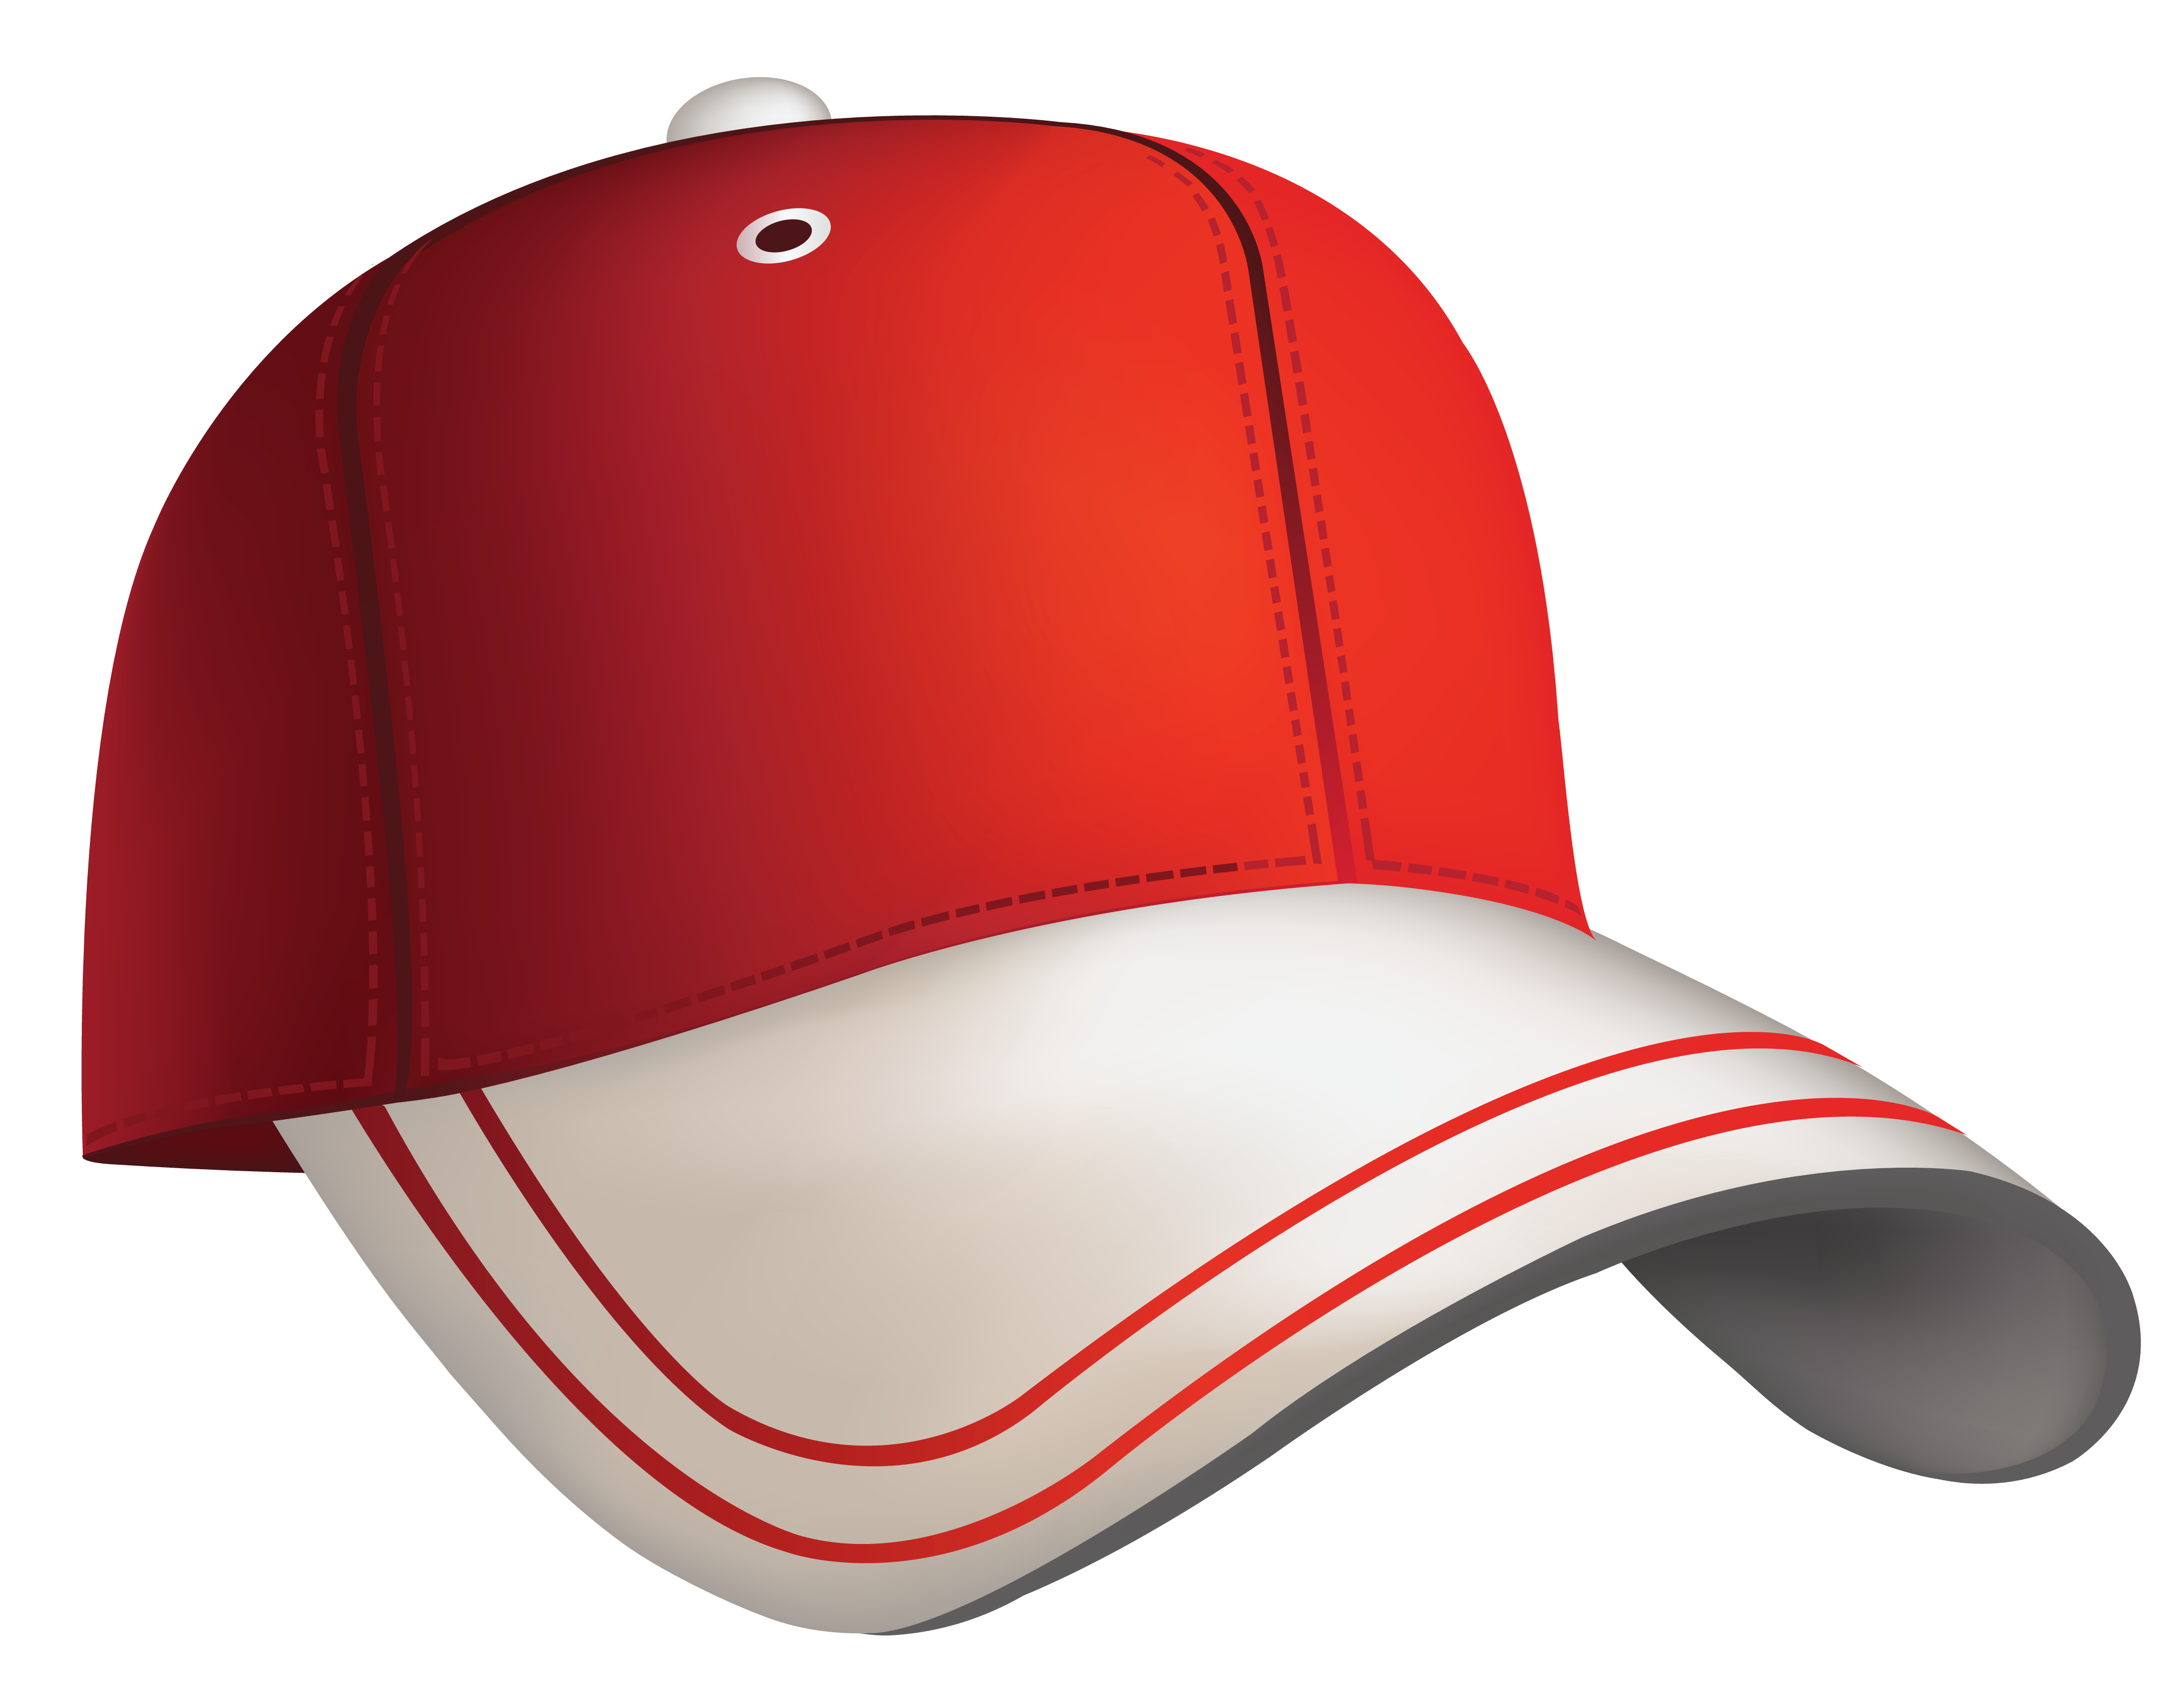 Baseball cap PNG image free download